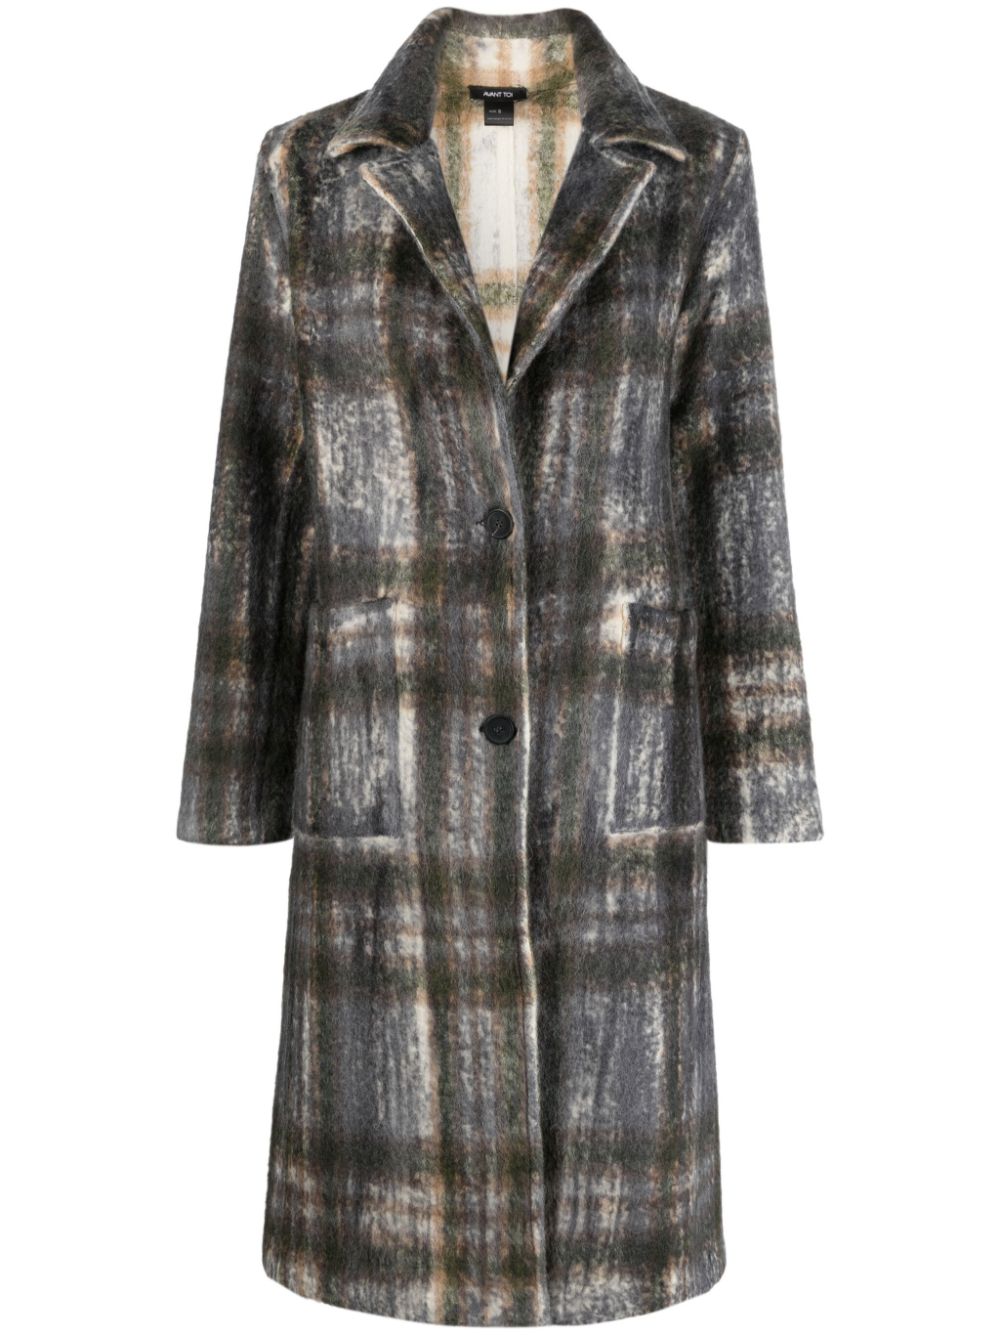 Avant Toi AVANT TOI- Tartan Wool Blend Coat